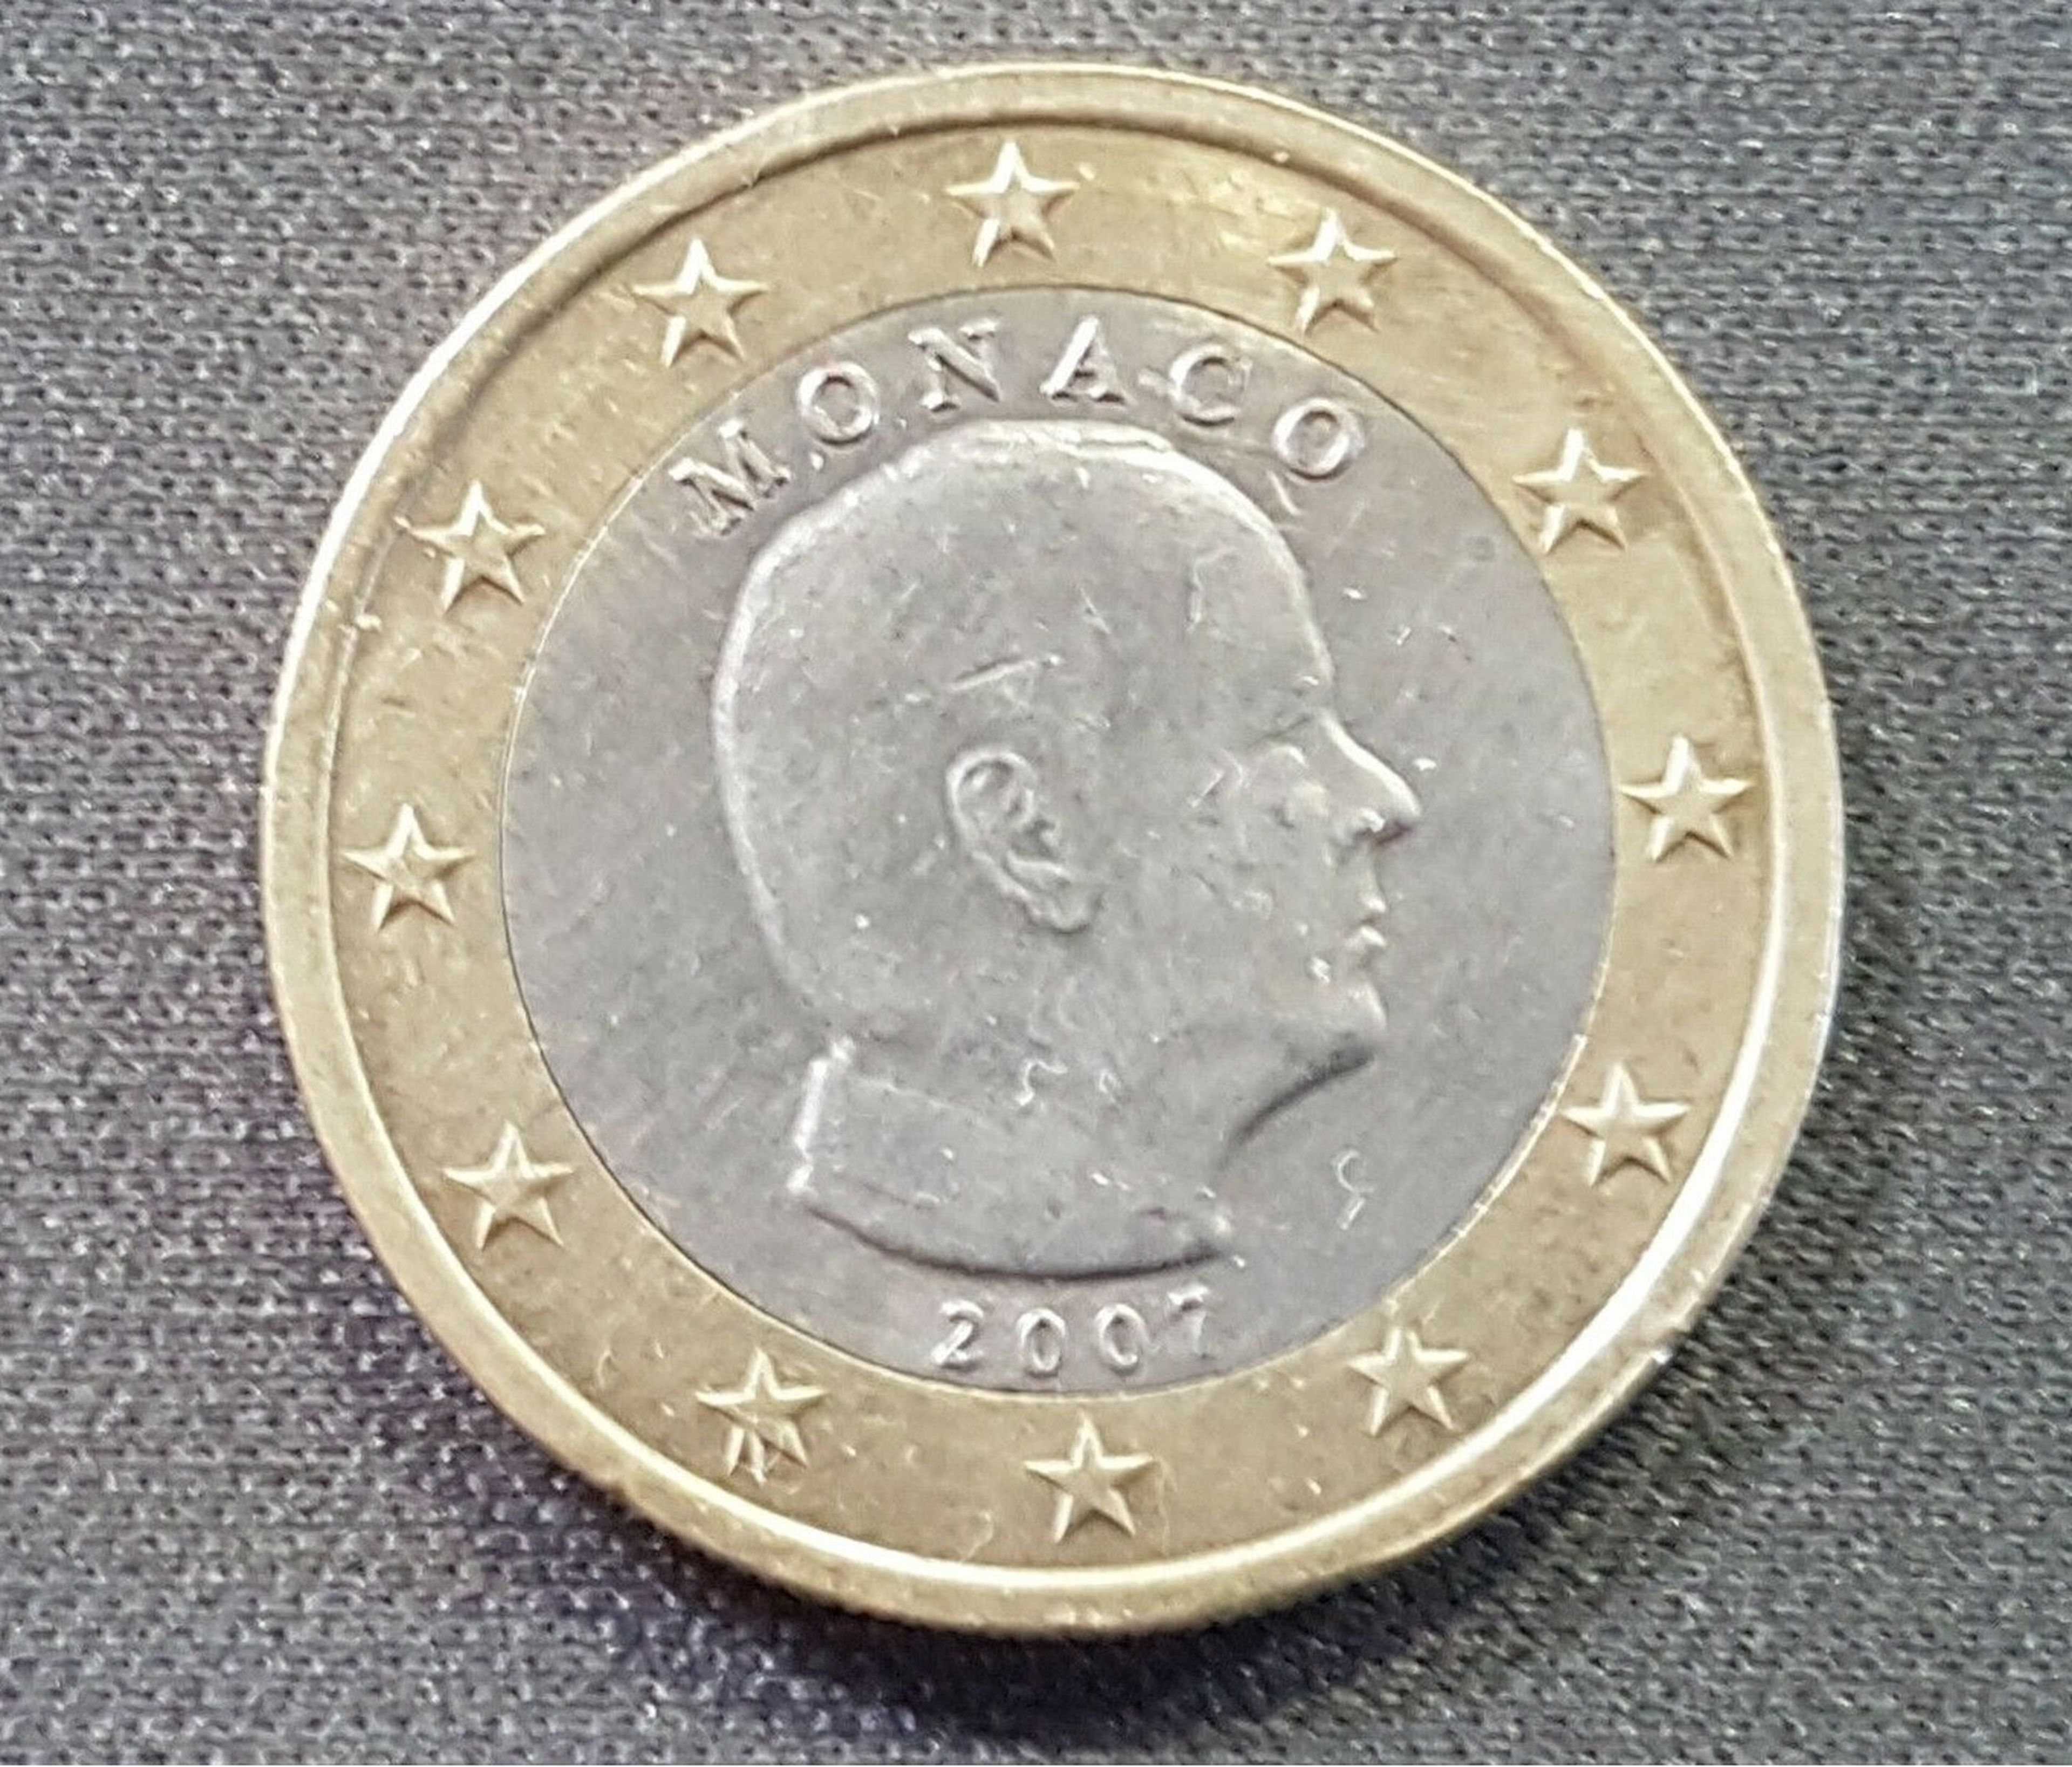 Moneda de 1 euro de Mónaco